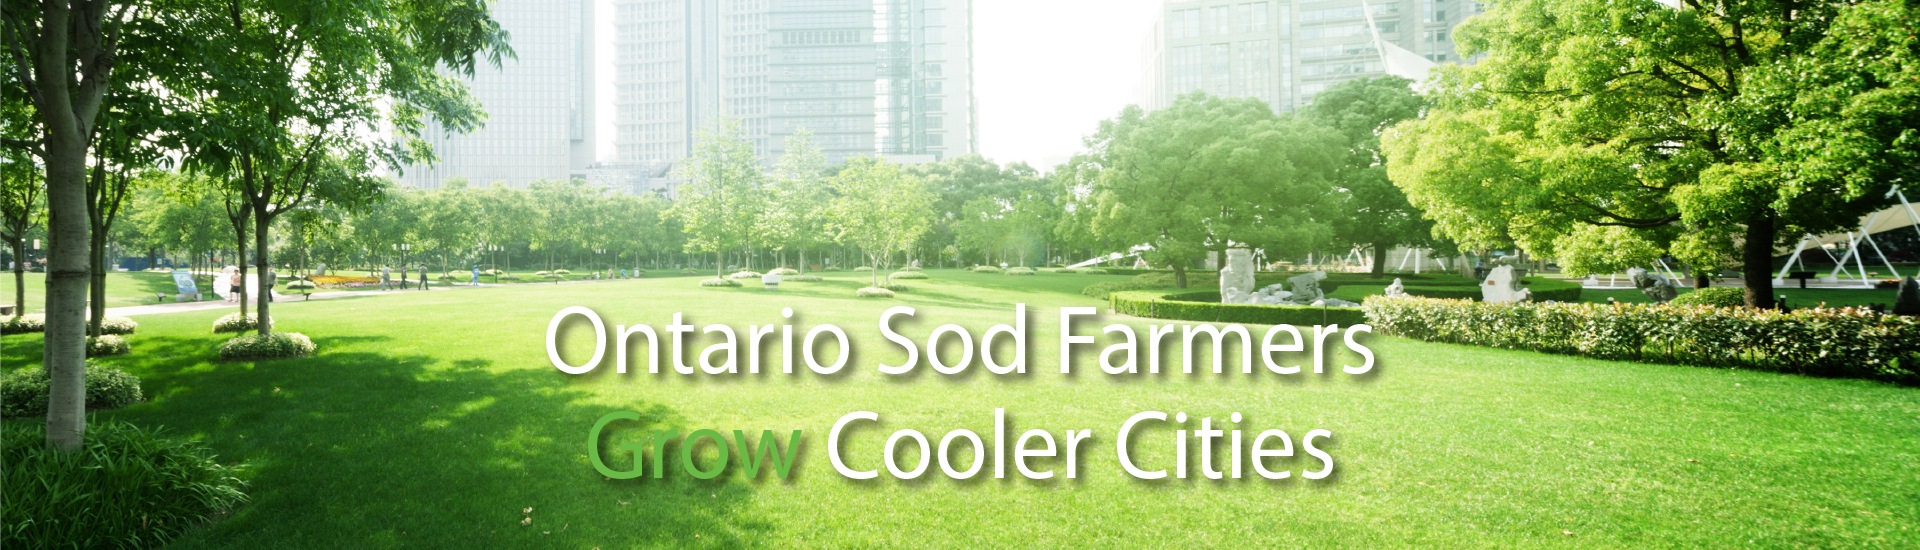 Ontario Sod Farmers Grow Cooler Cities